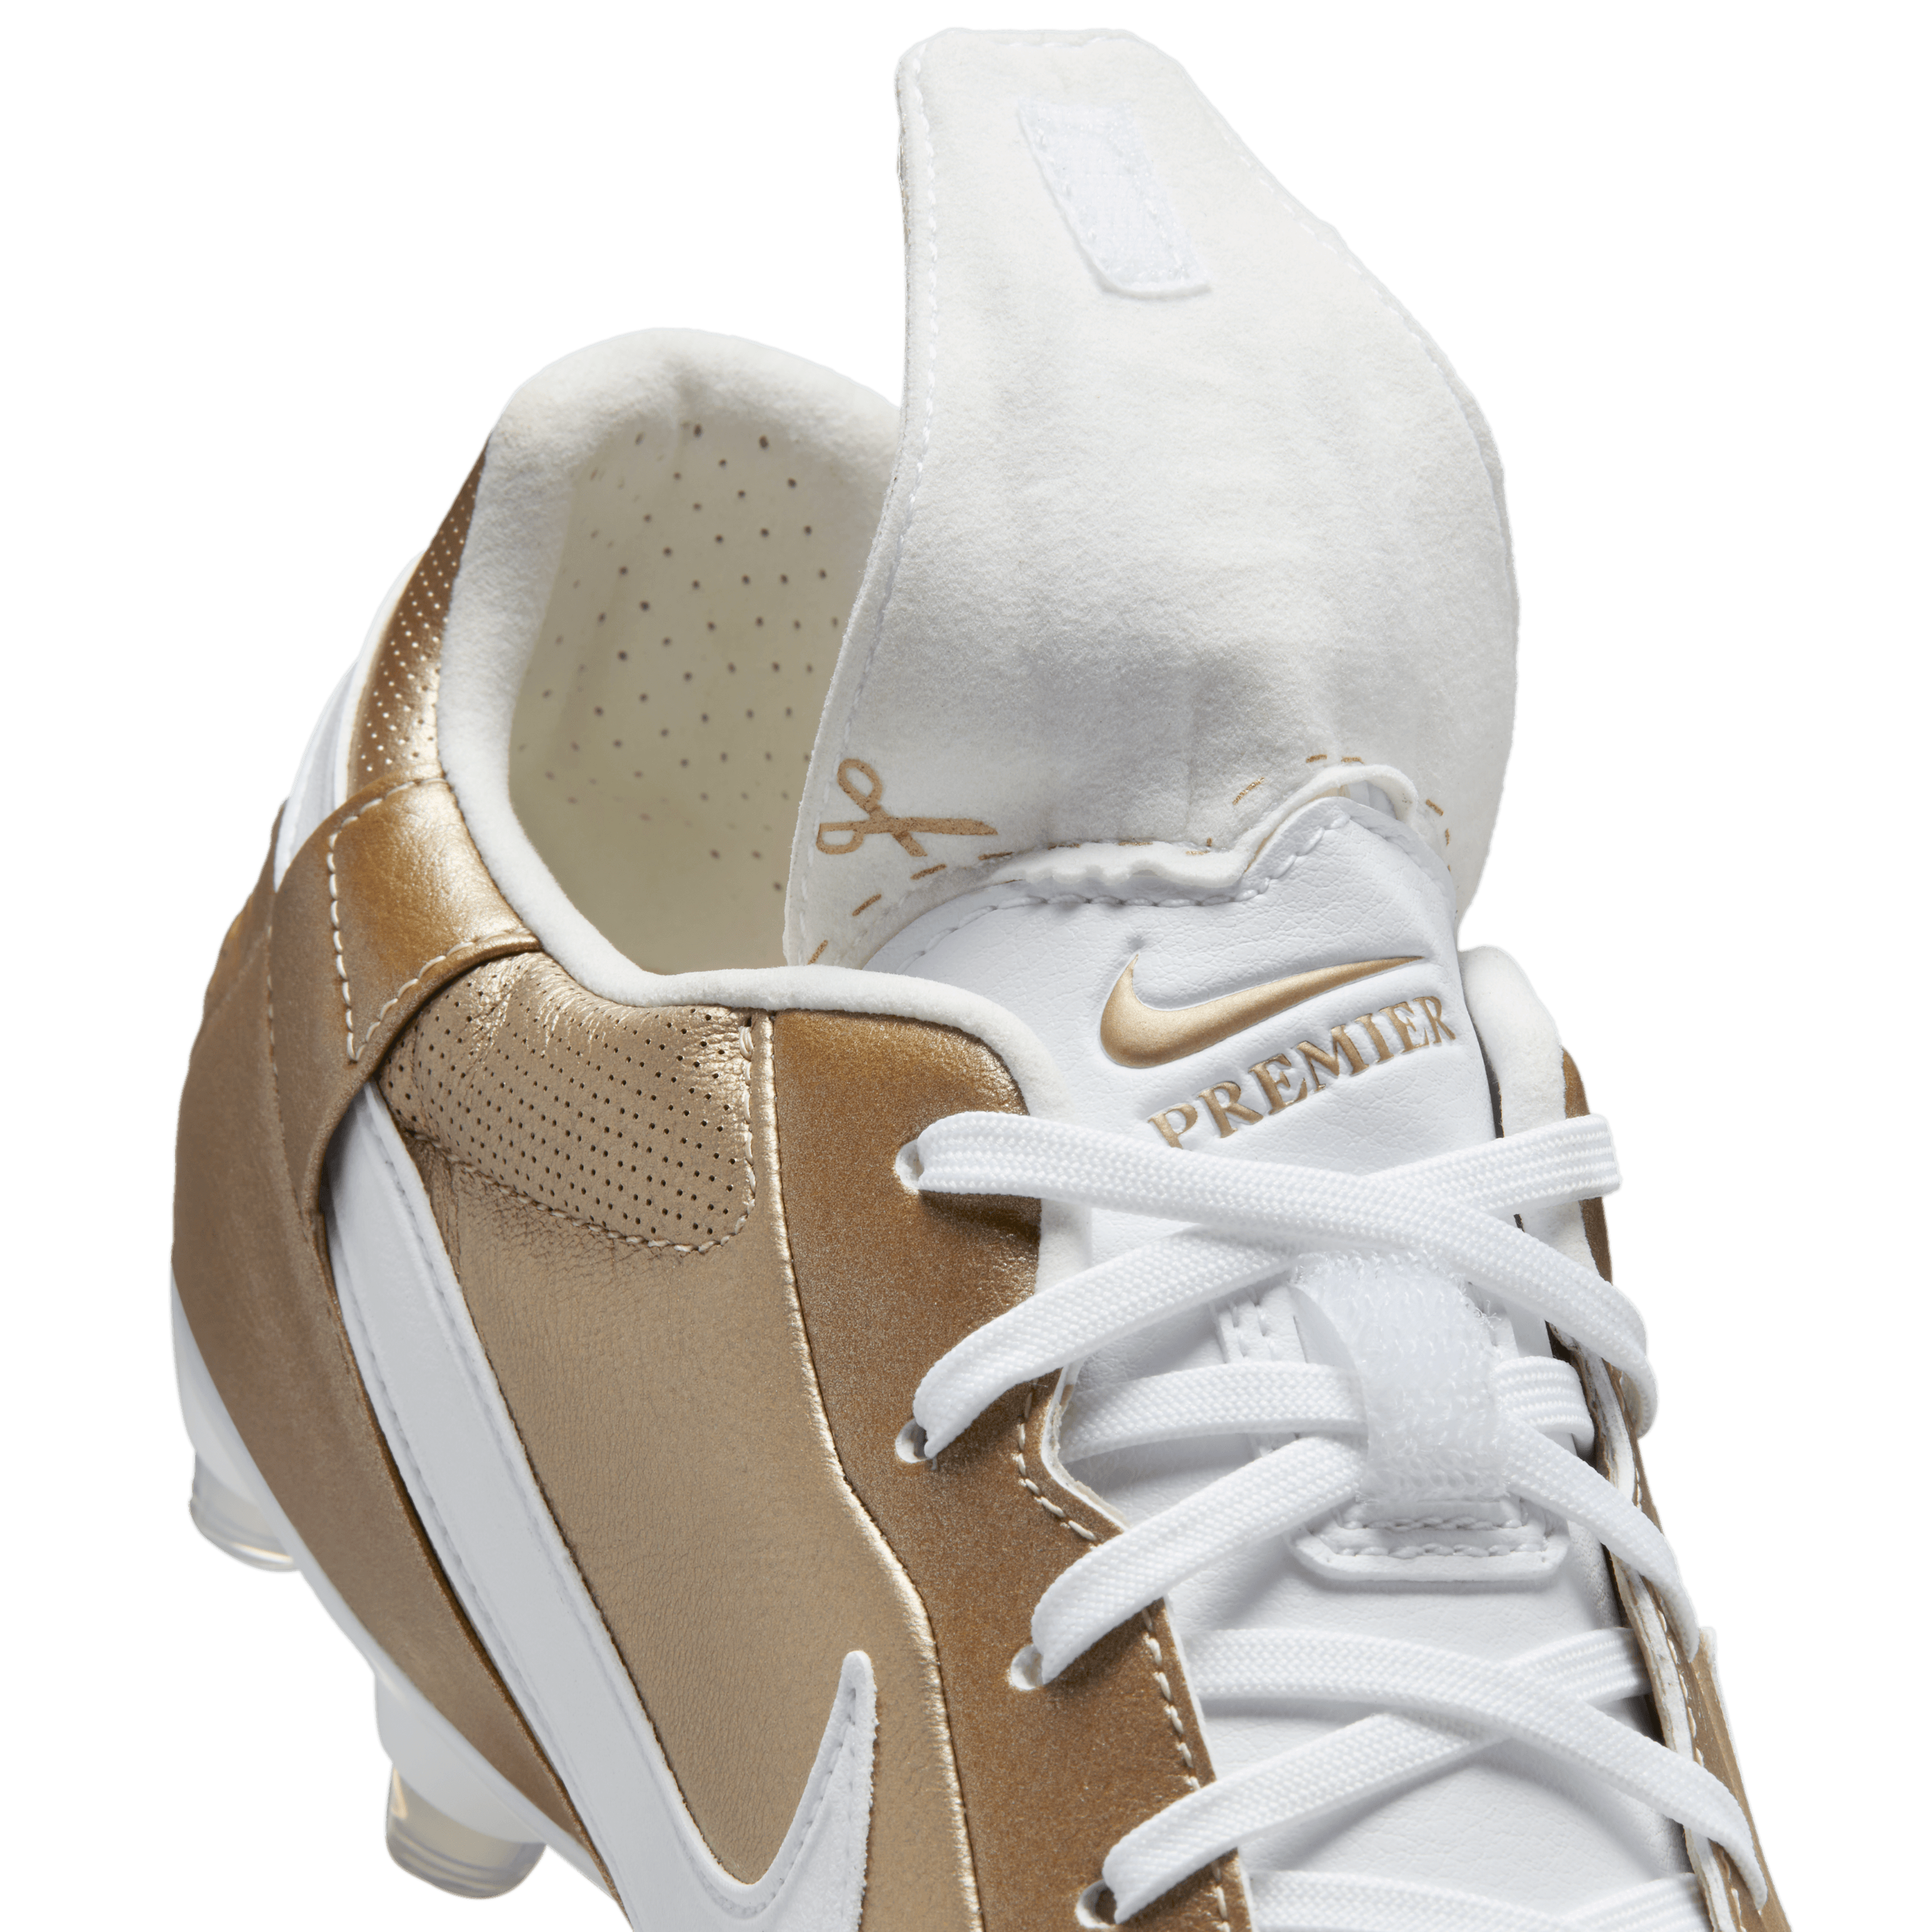 Nike Premier 3 FG-Mtlc Gold Grain/White-Mtlc Gold Grain